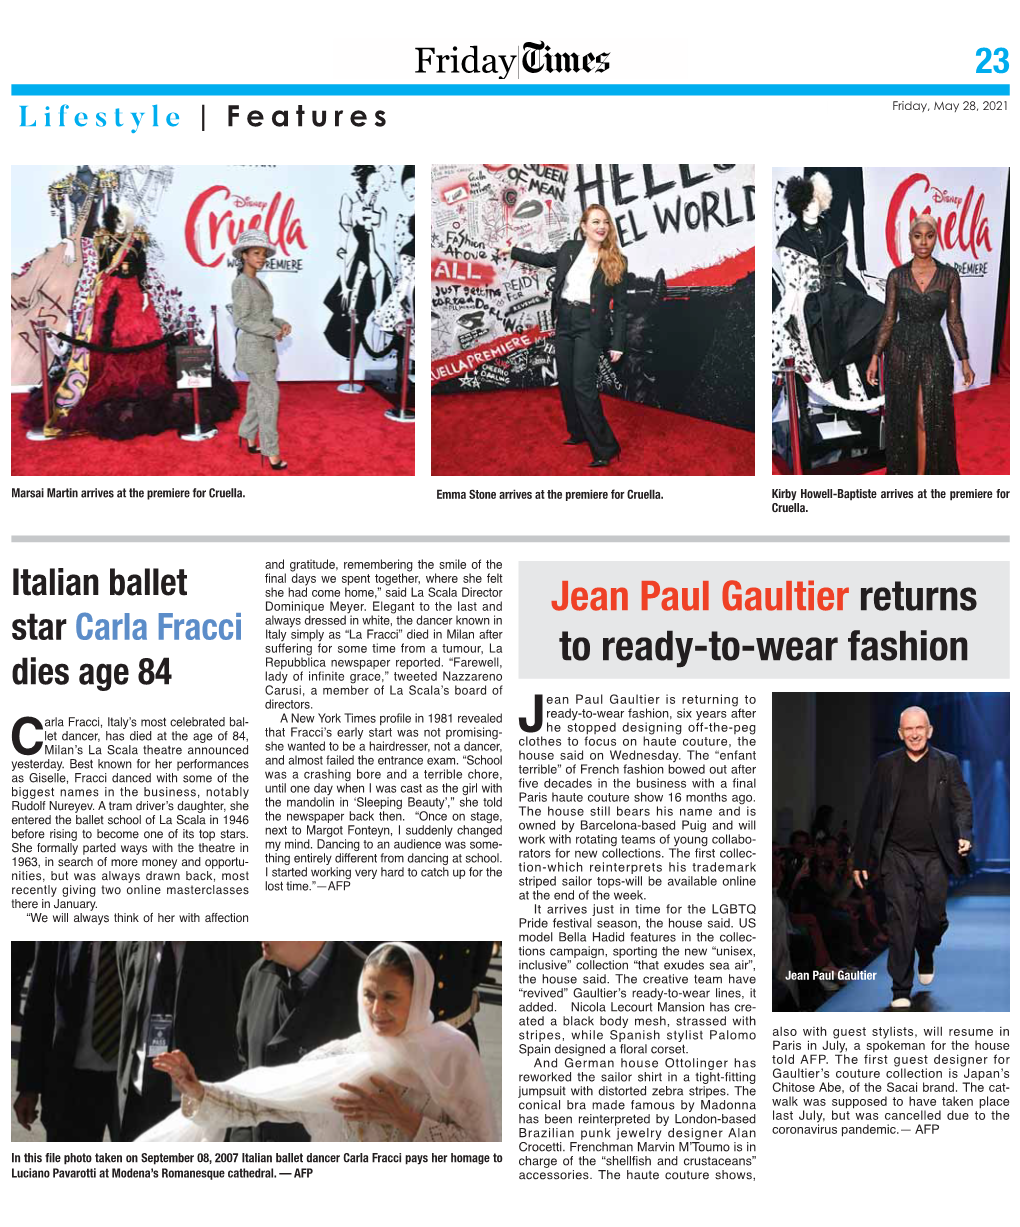 Jean Paul Gaultier Returns to Ready-To-Wear Fashion